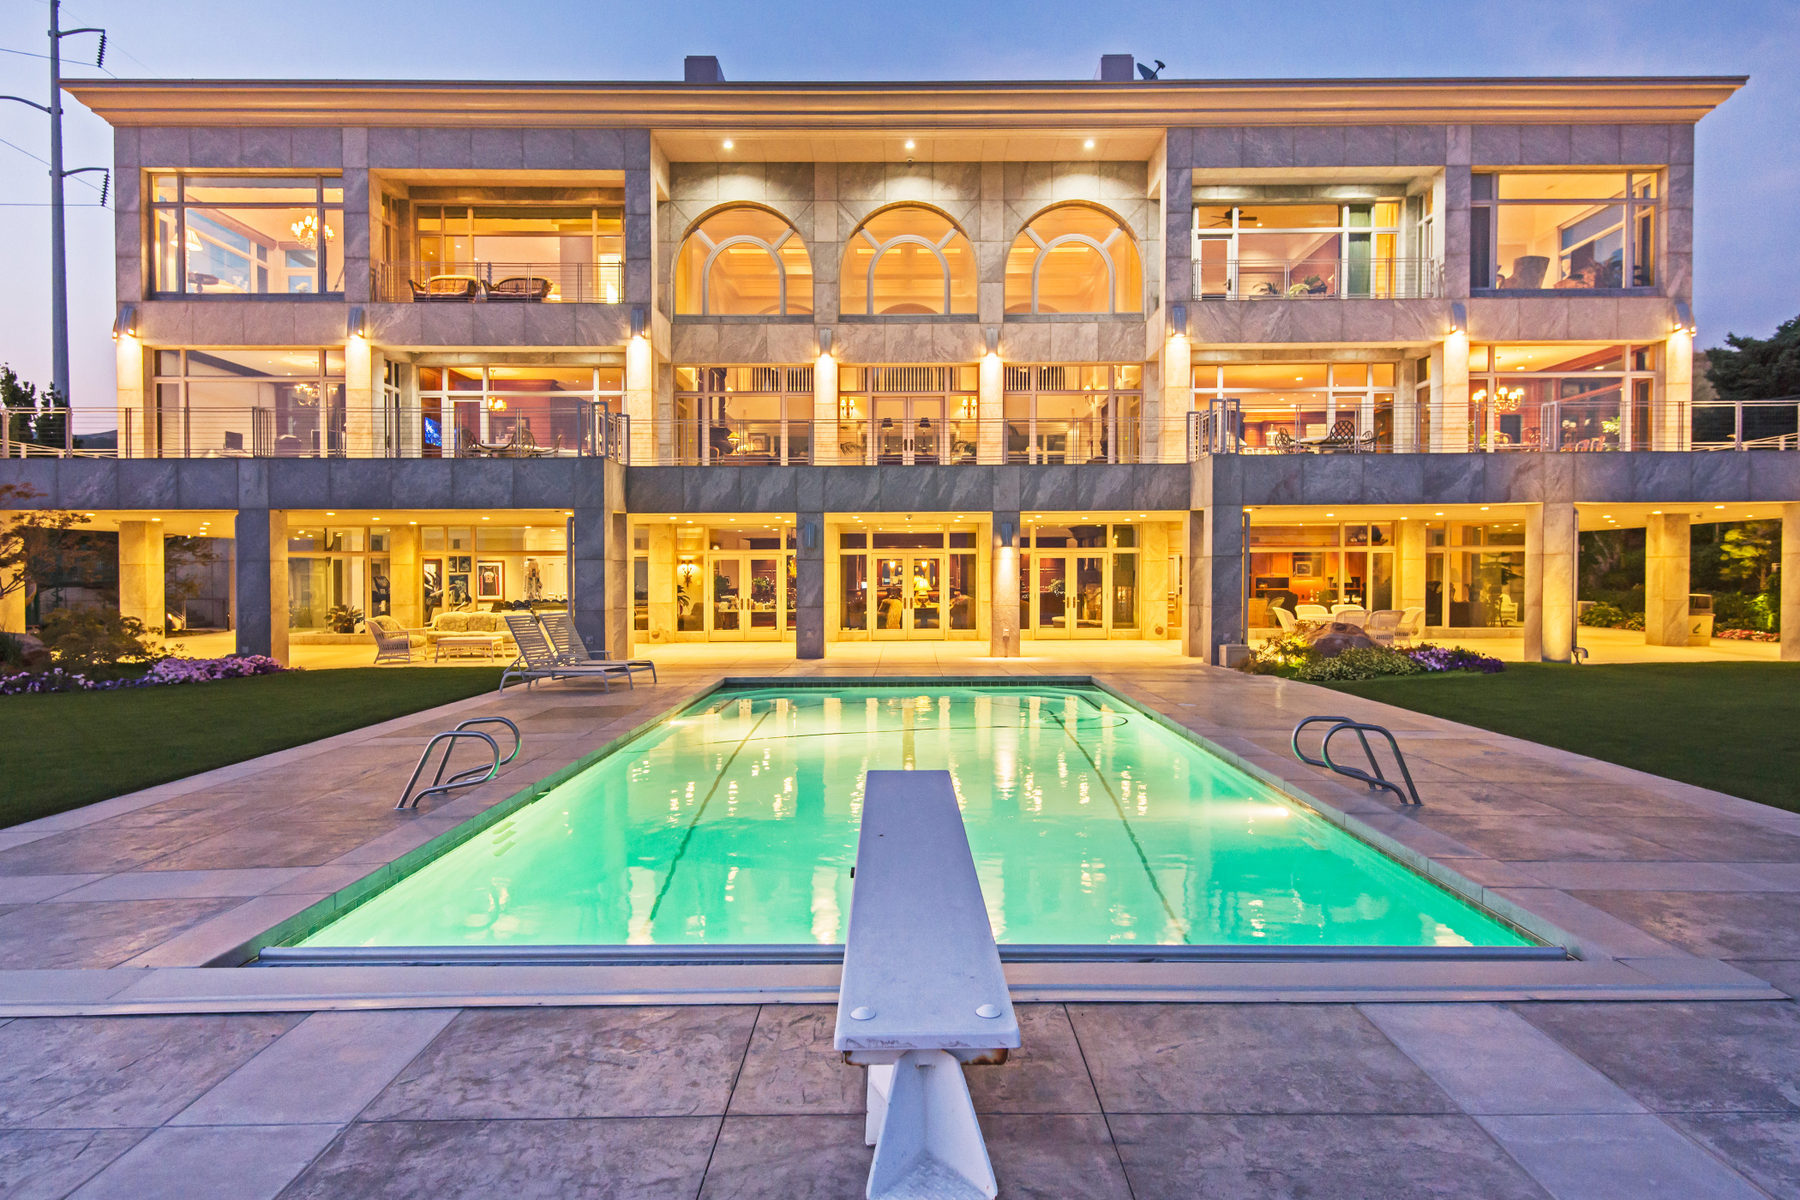 One-of-a-kind $8 Million Salt Lake City Mansion For Sale - GTspirit